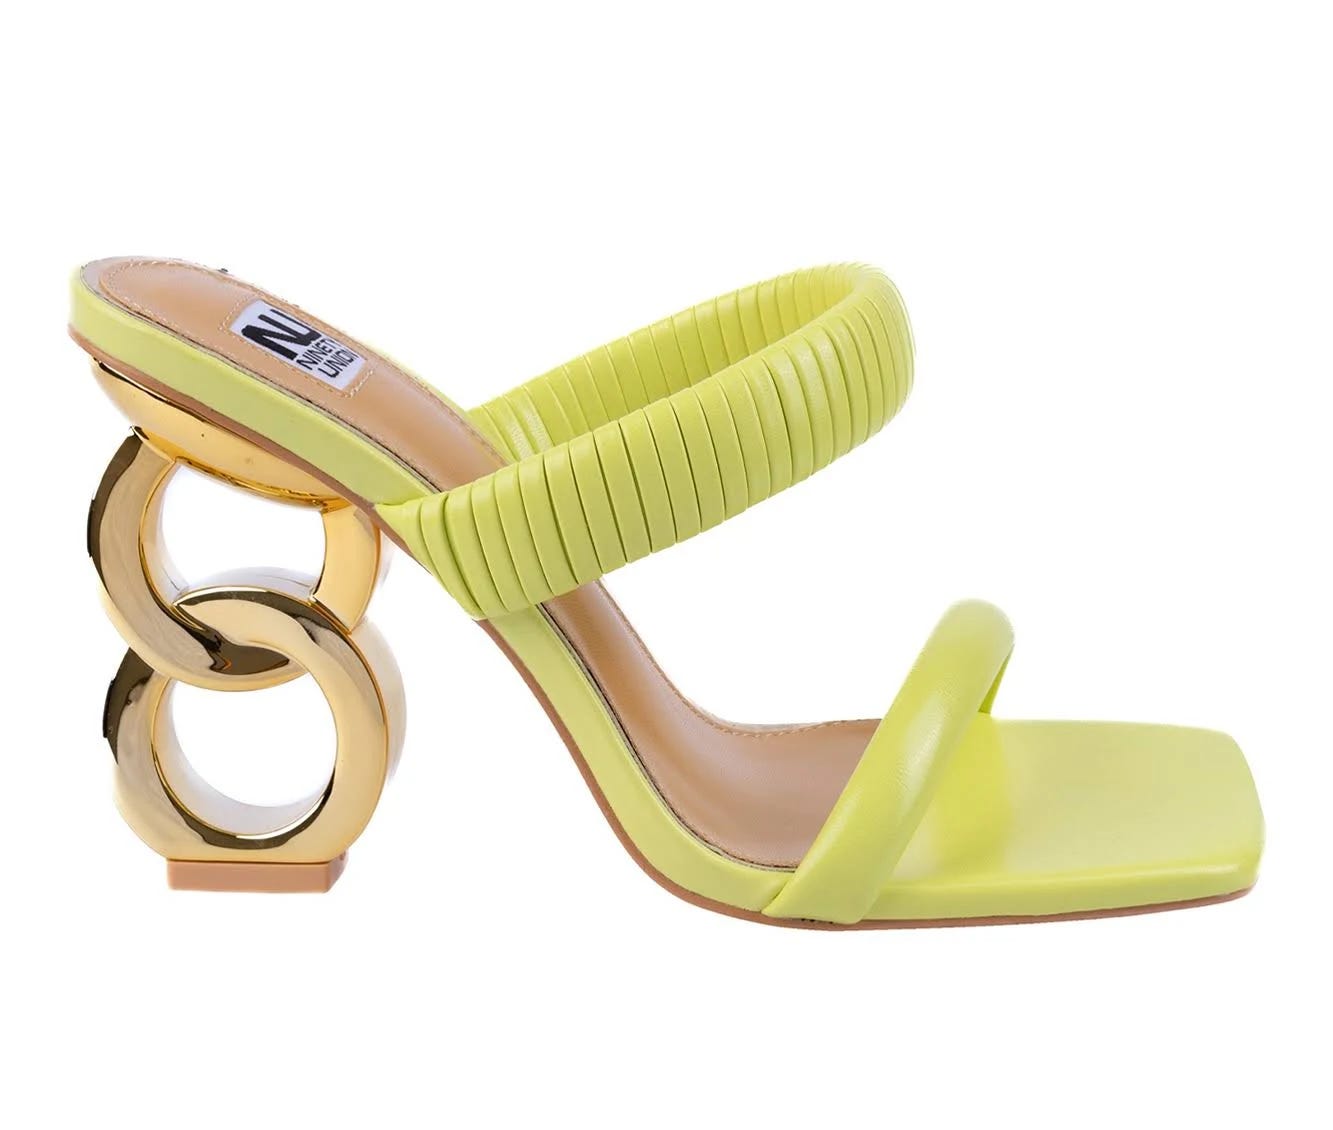 Raddle Sandals - Lime Heels for Women | Image